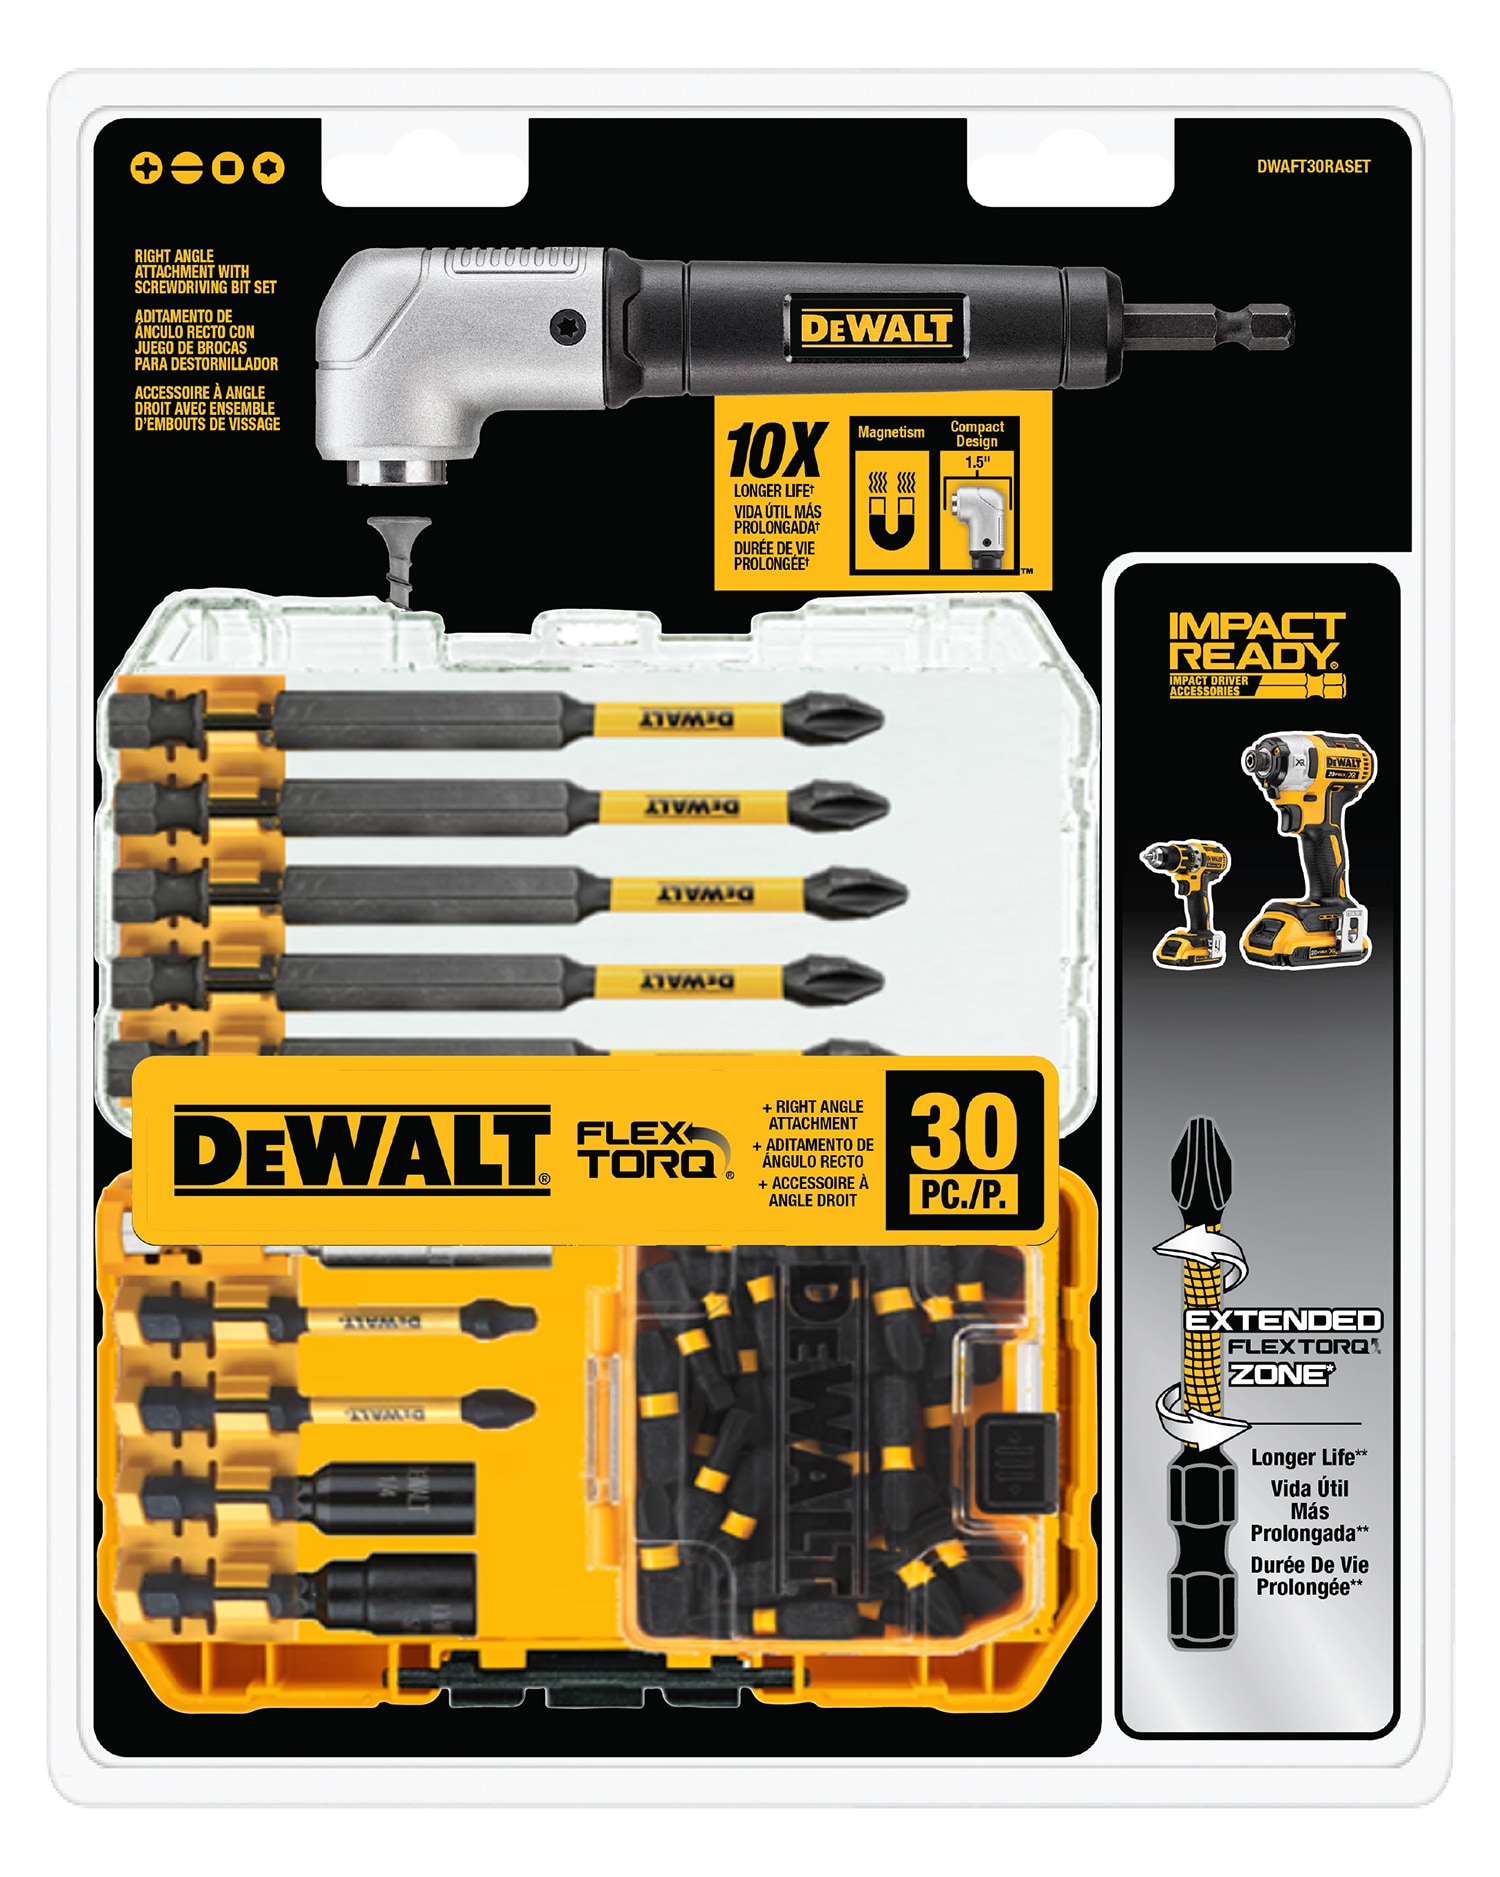 DEWALT Impact Ready Right Angle Drill Attachment & FlexTorq 26-Piece 1/4-in  x Set Impact Driver Bit Set